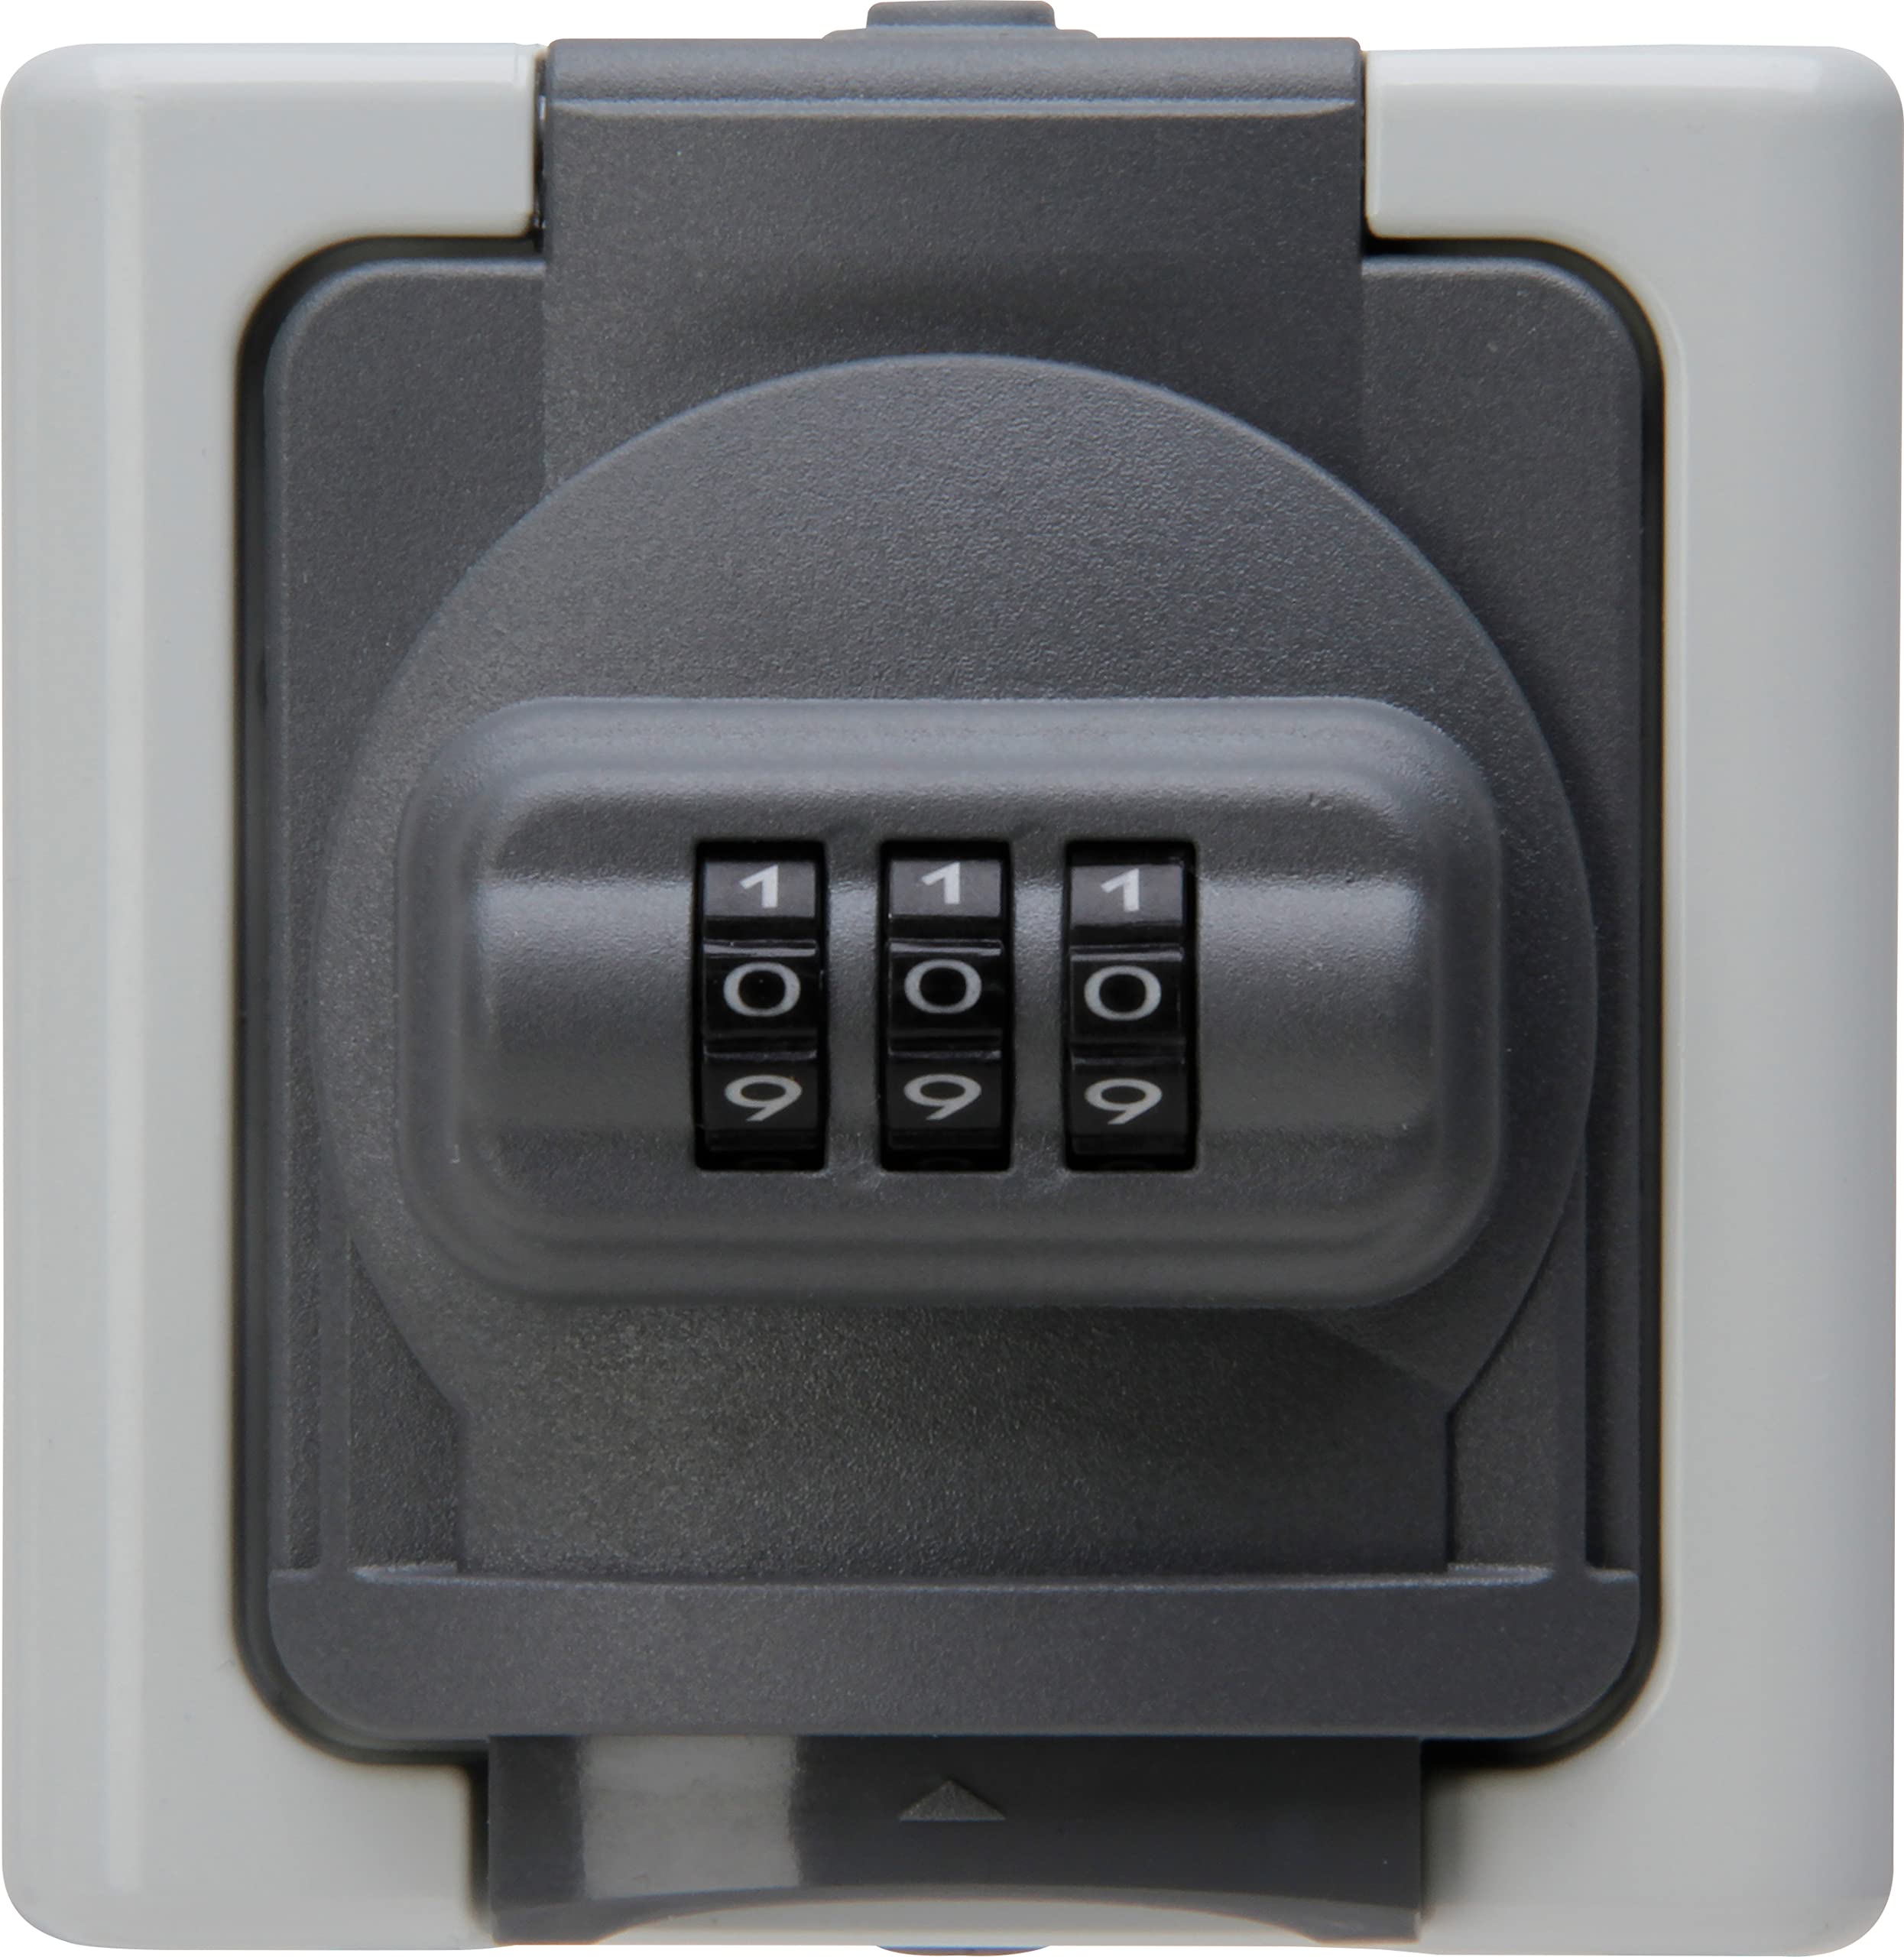 Kopp, Blue Electric - Schutzkontakt-Steckdose mit Zahlenschloss, Farbe: grau, 109856007